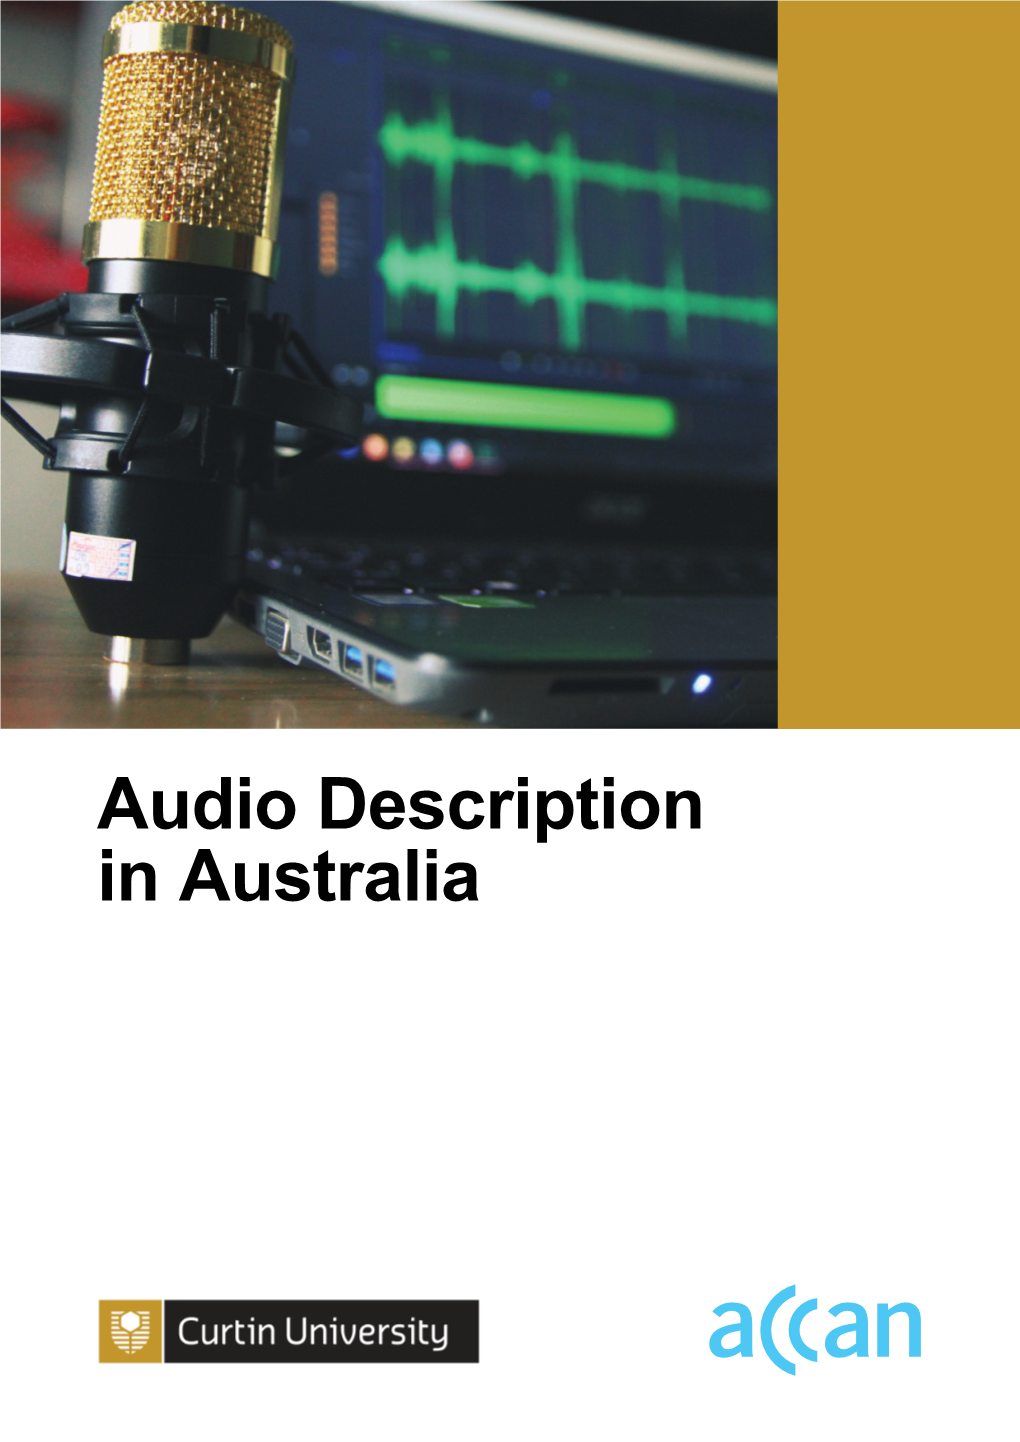 Audio Description in Australia